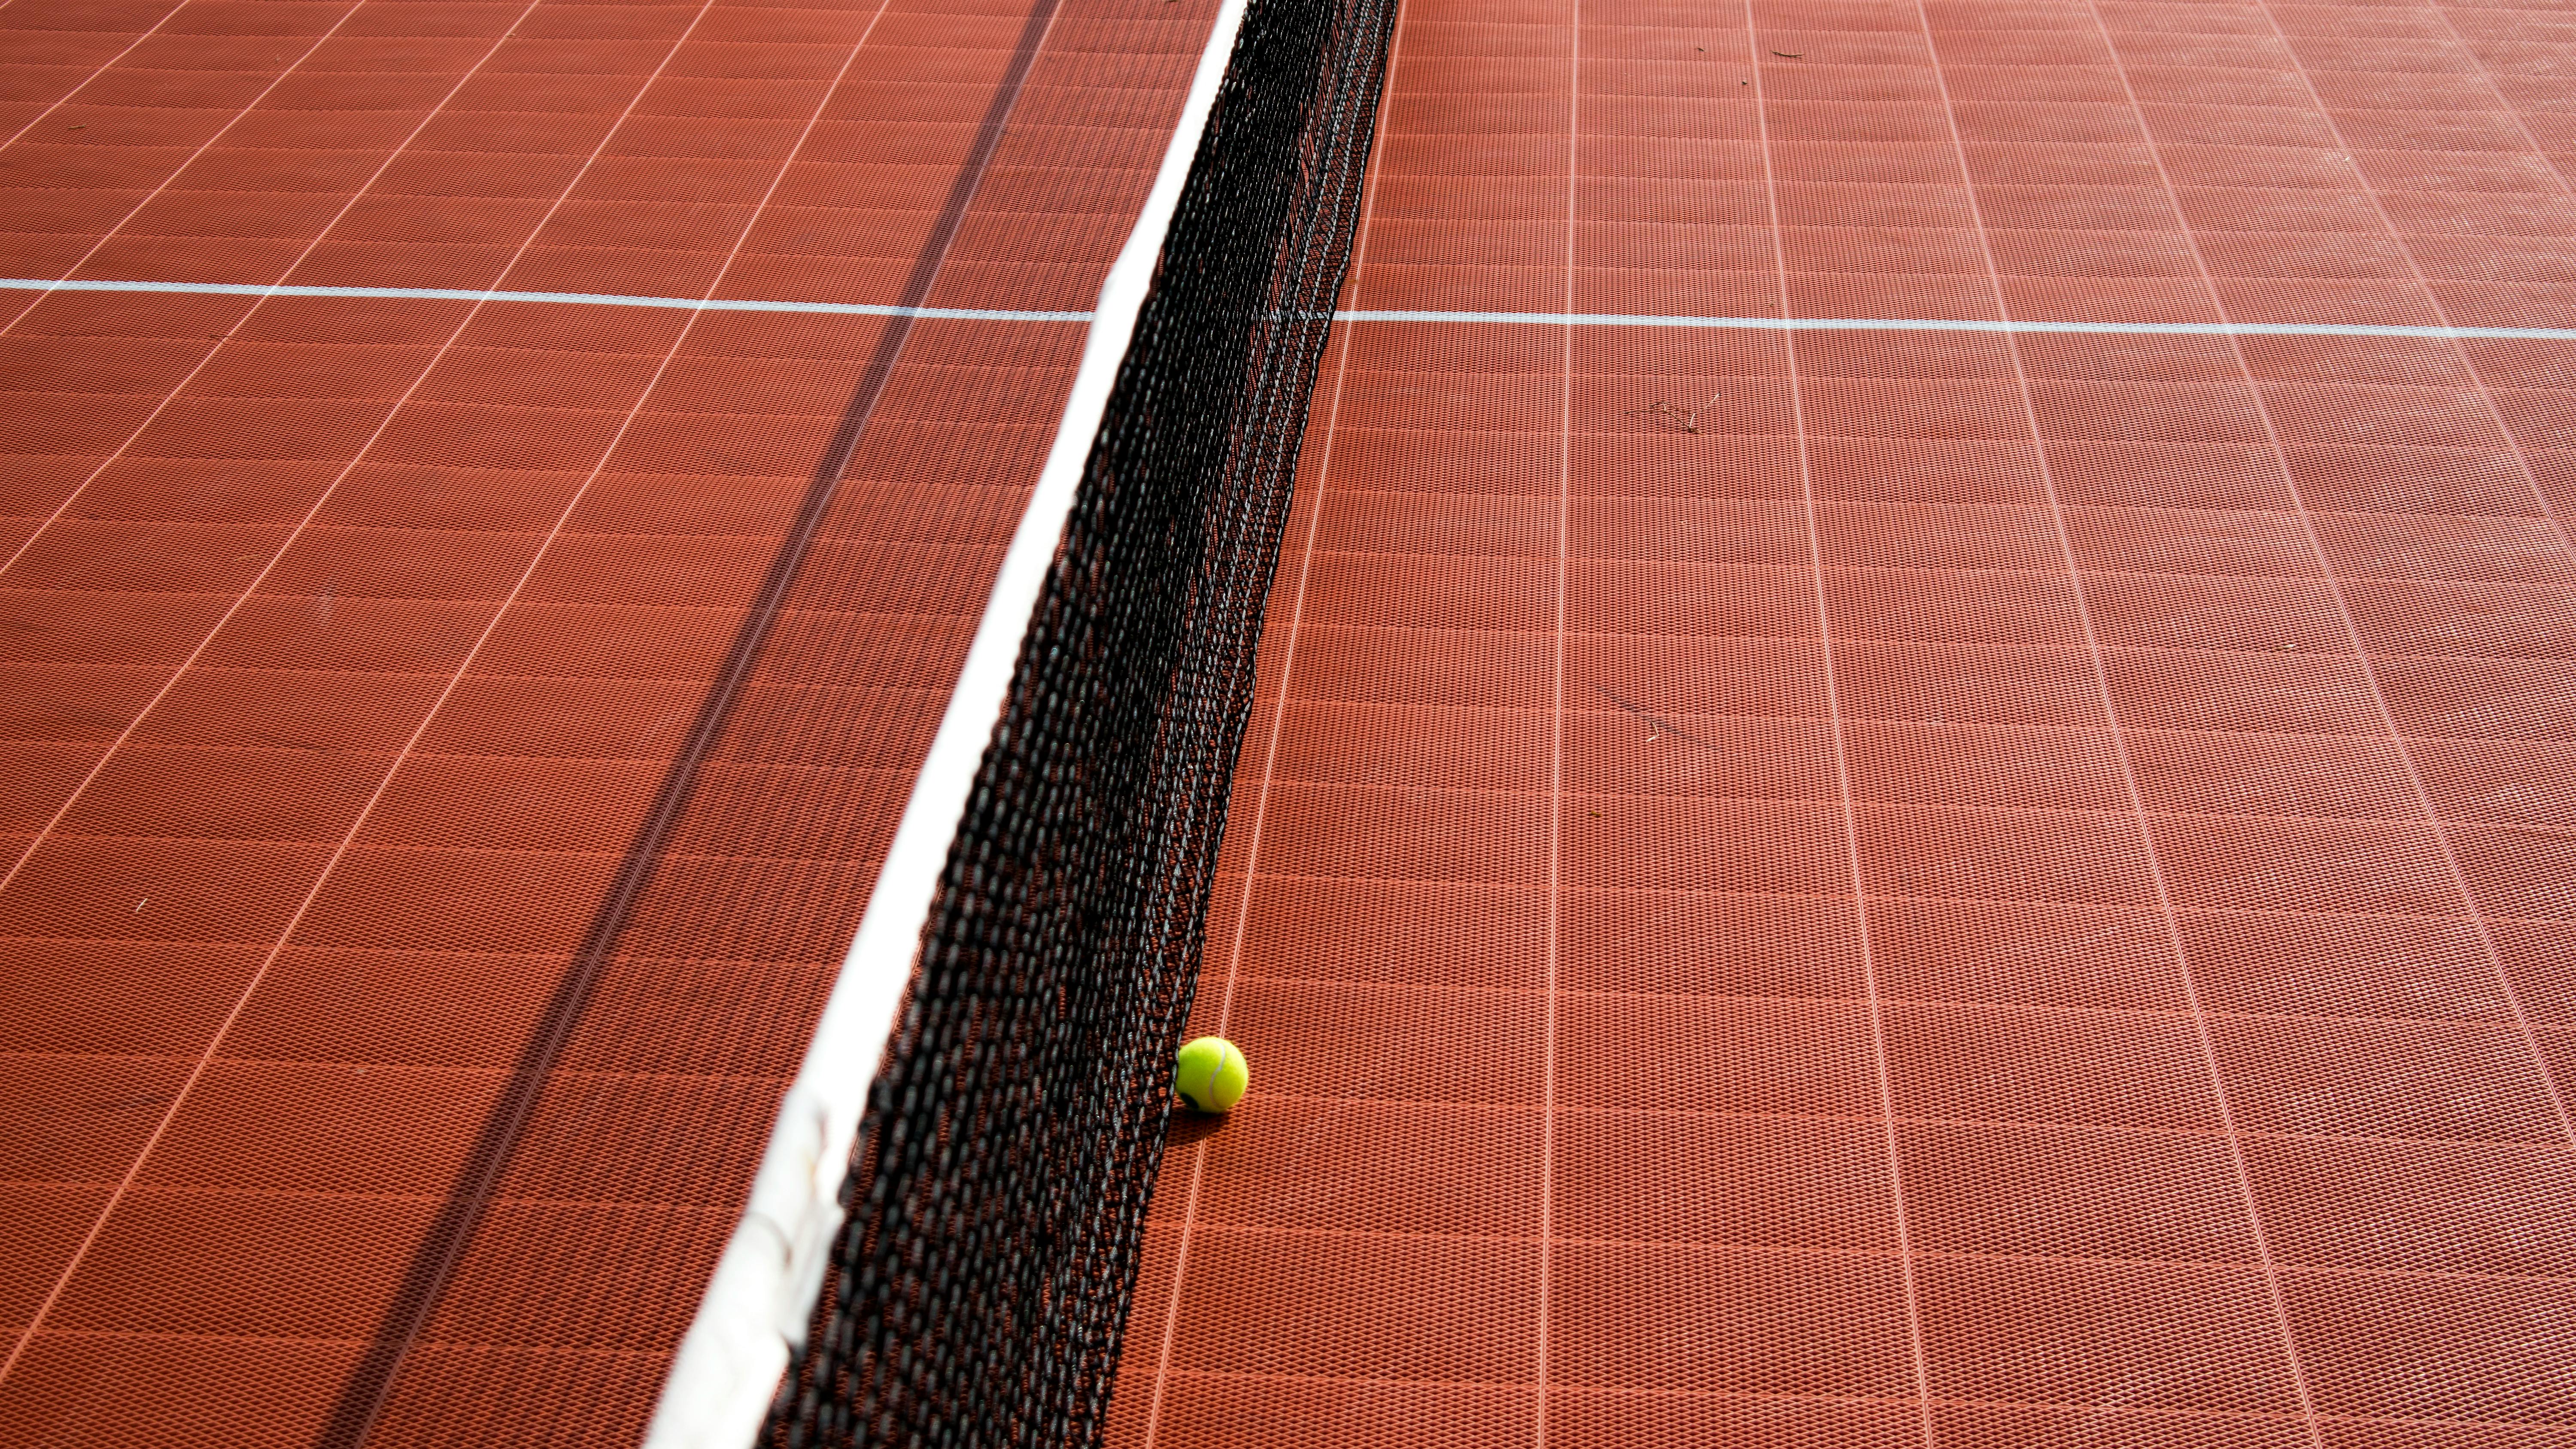 Free stock photo of tennis, tennis ball, tennis court